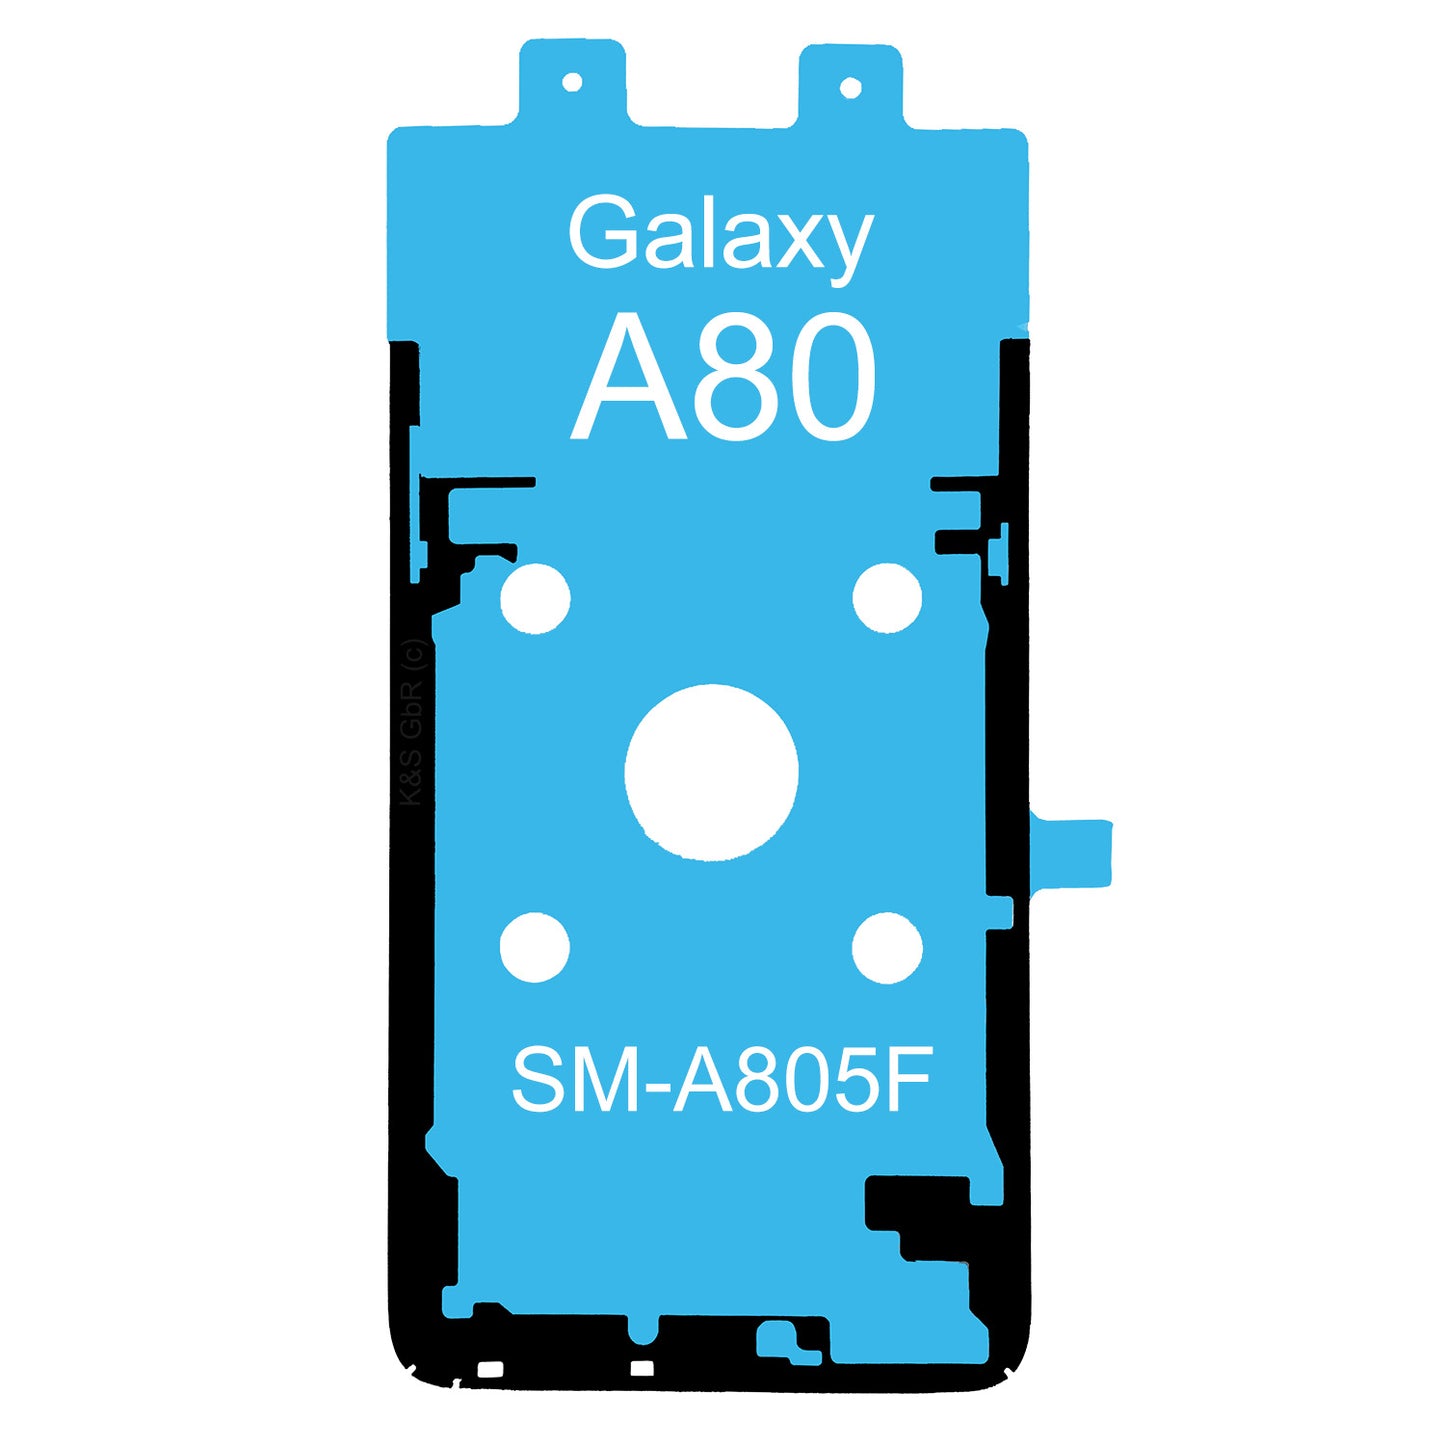 2x Samsung Galaxy A80 SM-A805F Rahmen Kleber Klebepad Adhesive Wasser Dichtung Kleberahmen Rahmenkleber